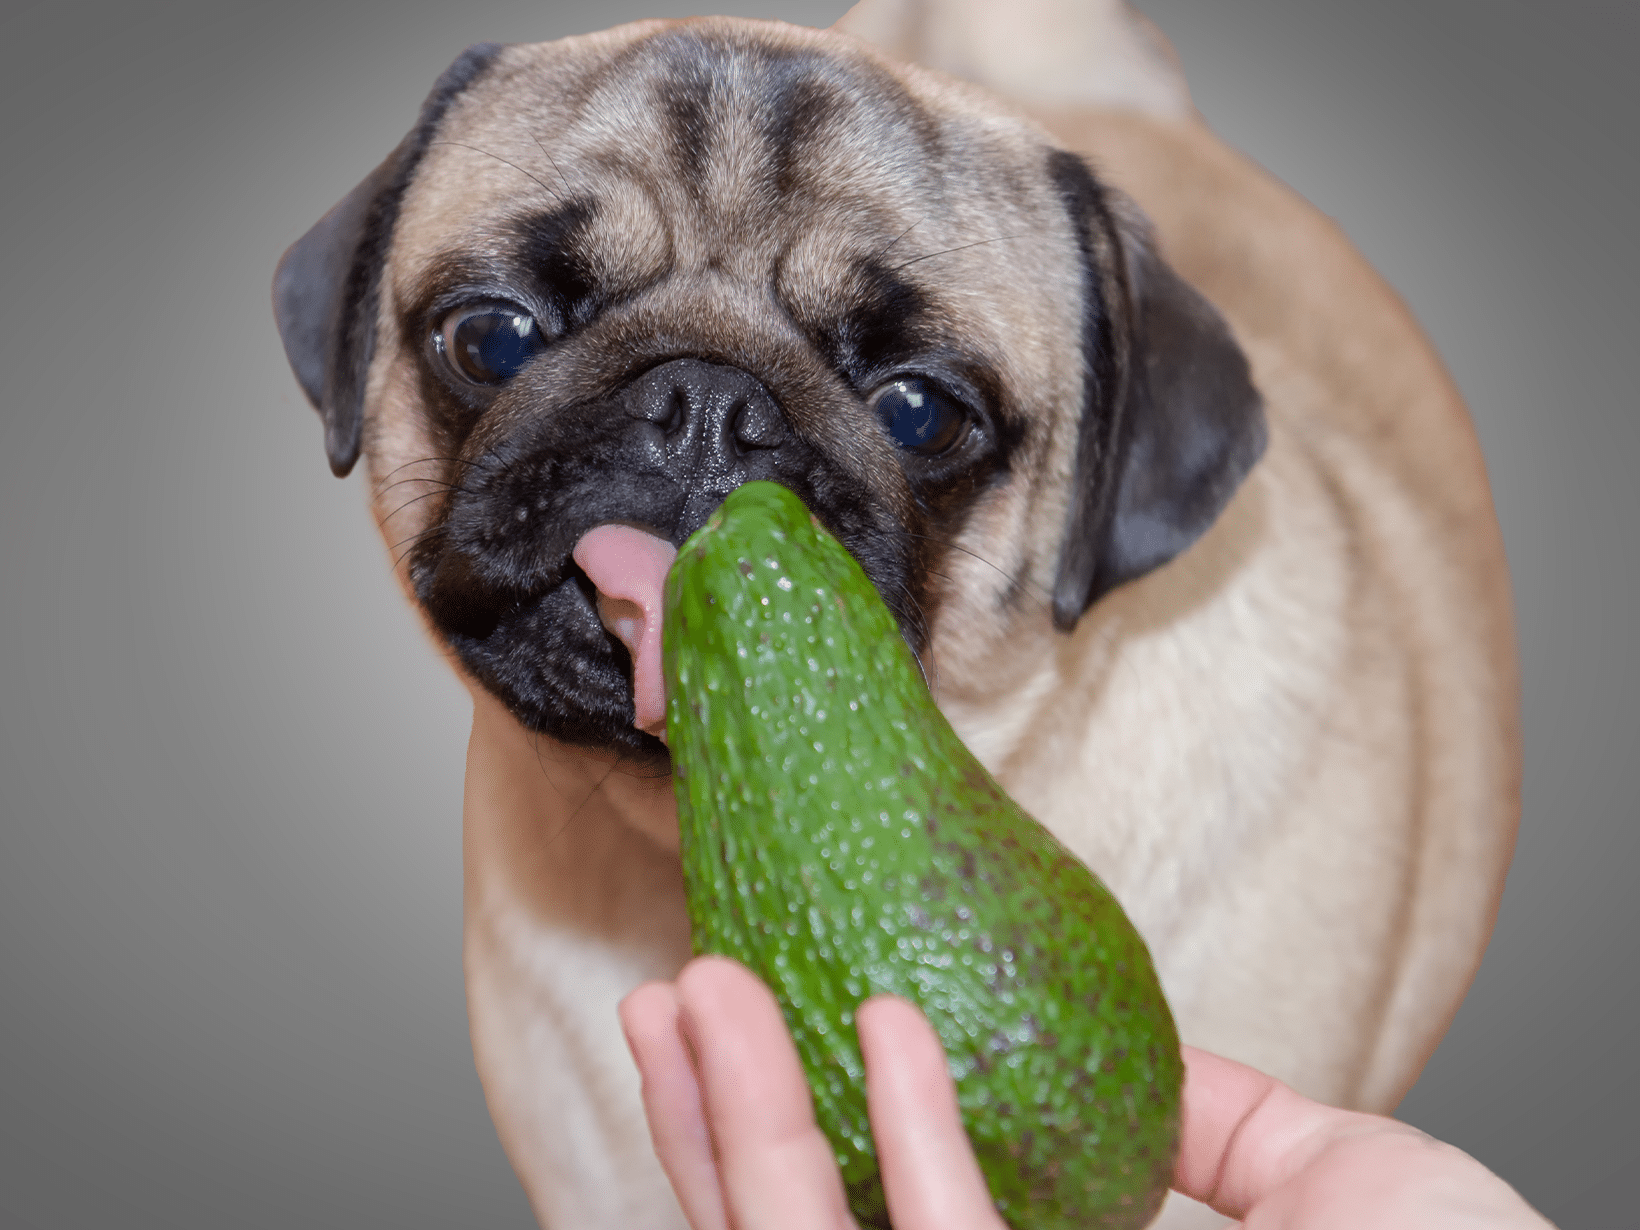 Mag een hond avocado?